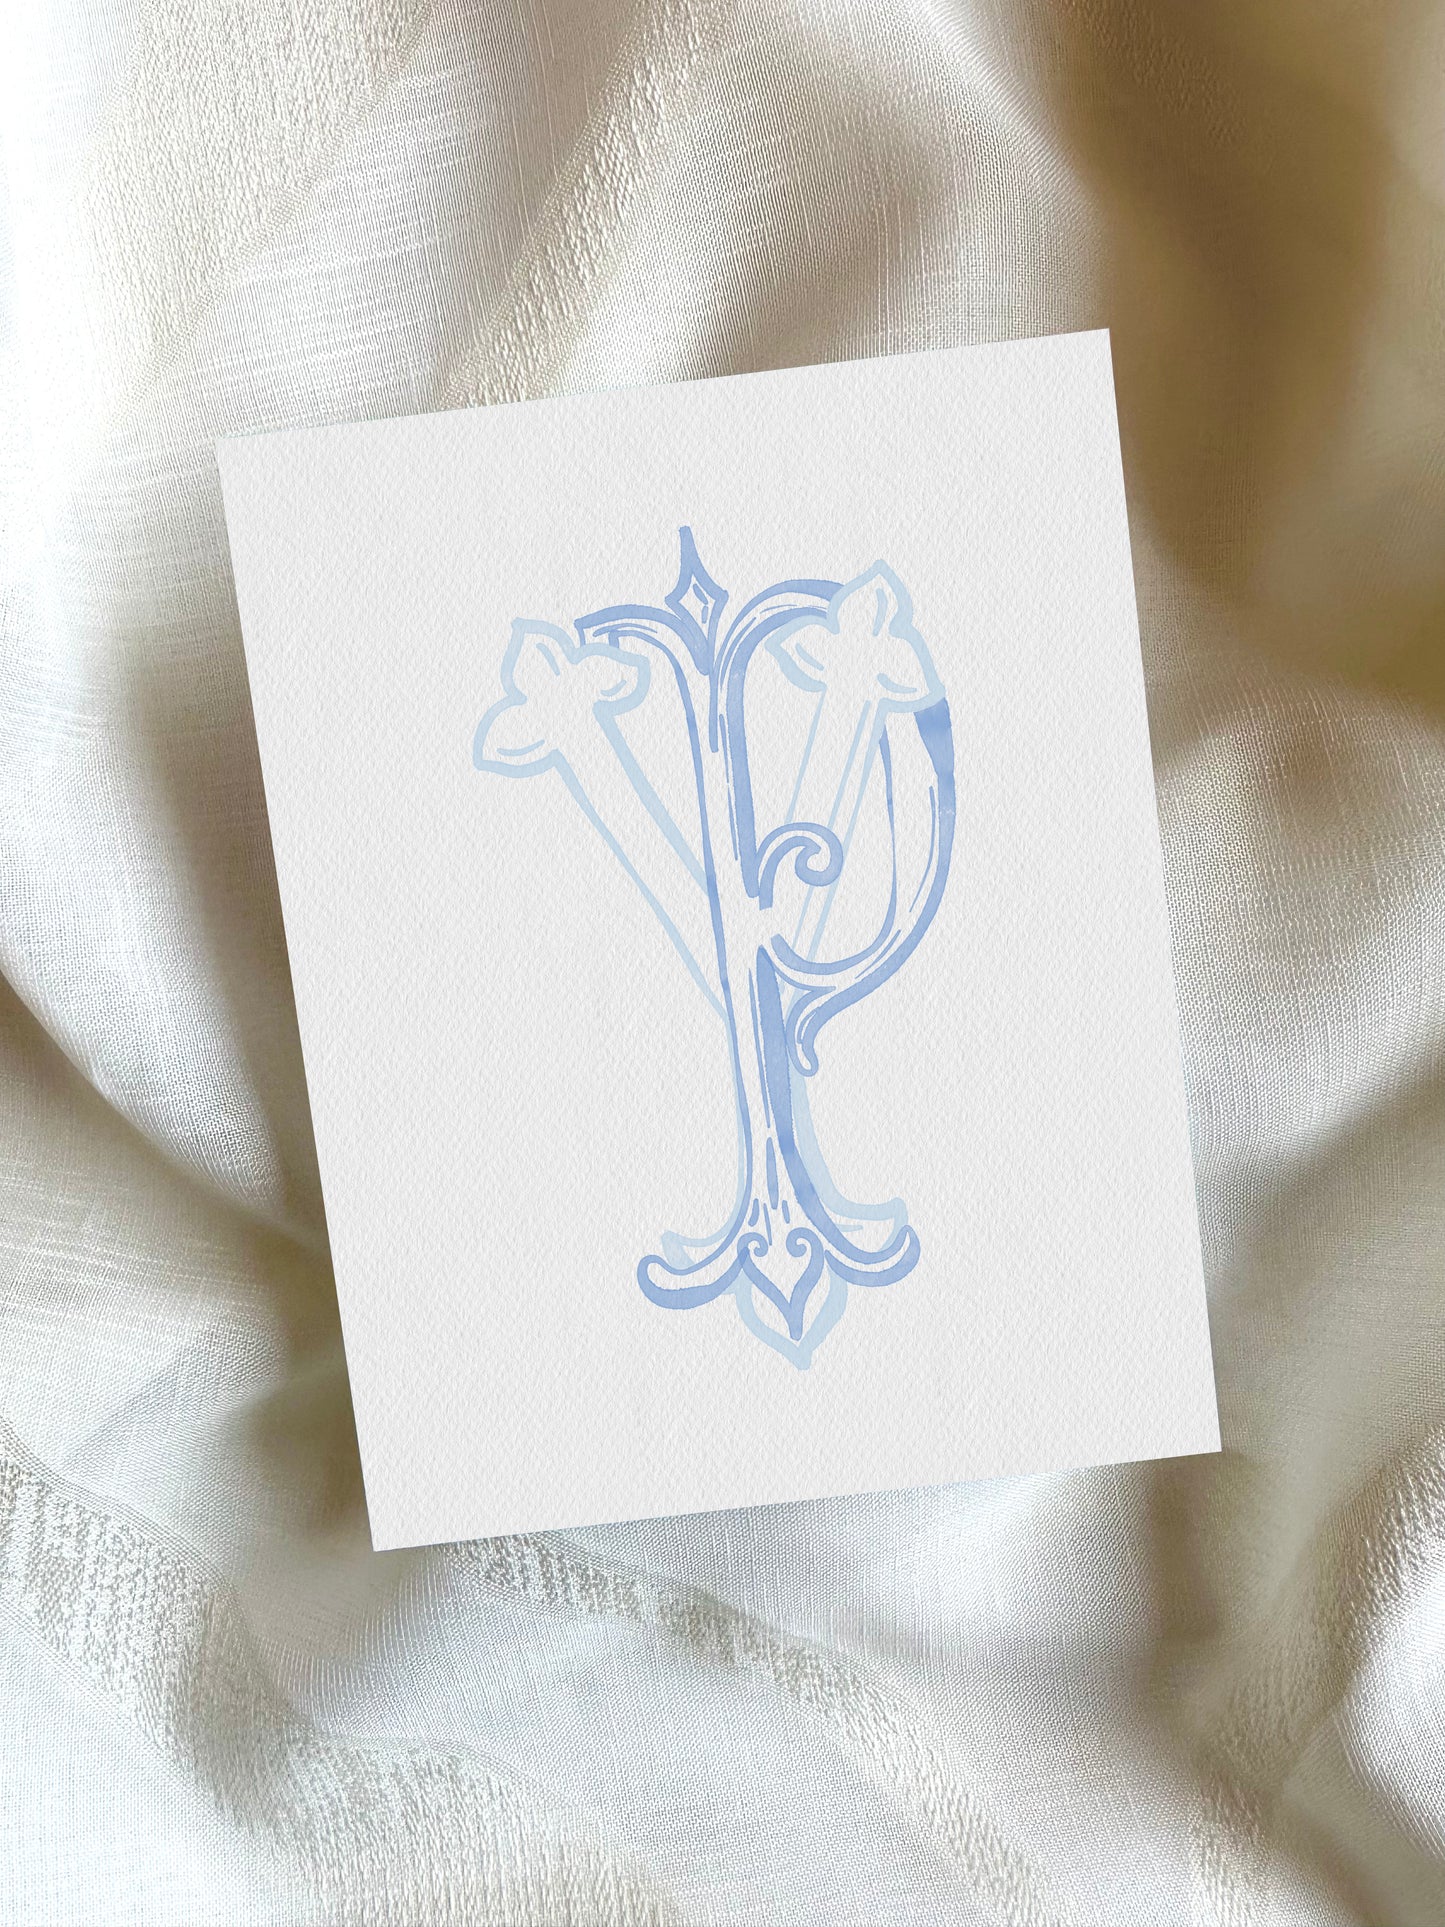 2 Letter Monogram with Letters PY YP | Digital Download - Wedding Monogram SVG, Personal Logo, Wedding Logo for Wedding Invitations The Wedding Crest Lab